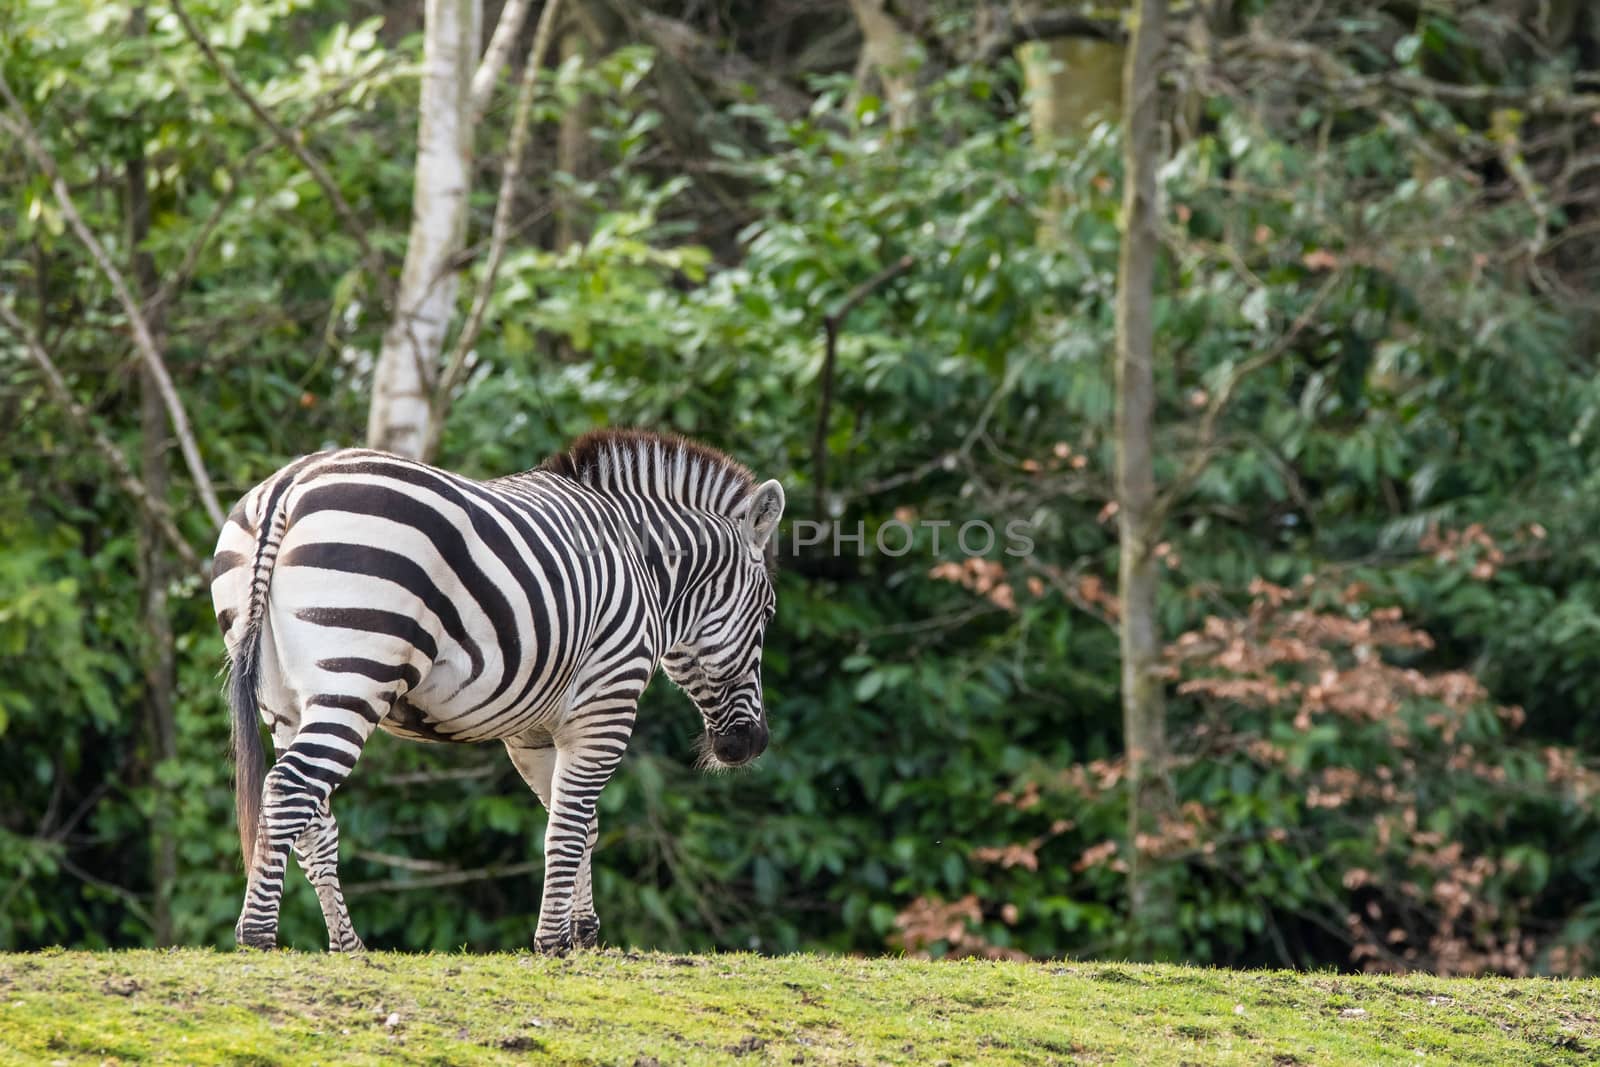 Zebra in artificial habitat at zoo in Seattle, WA